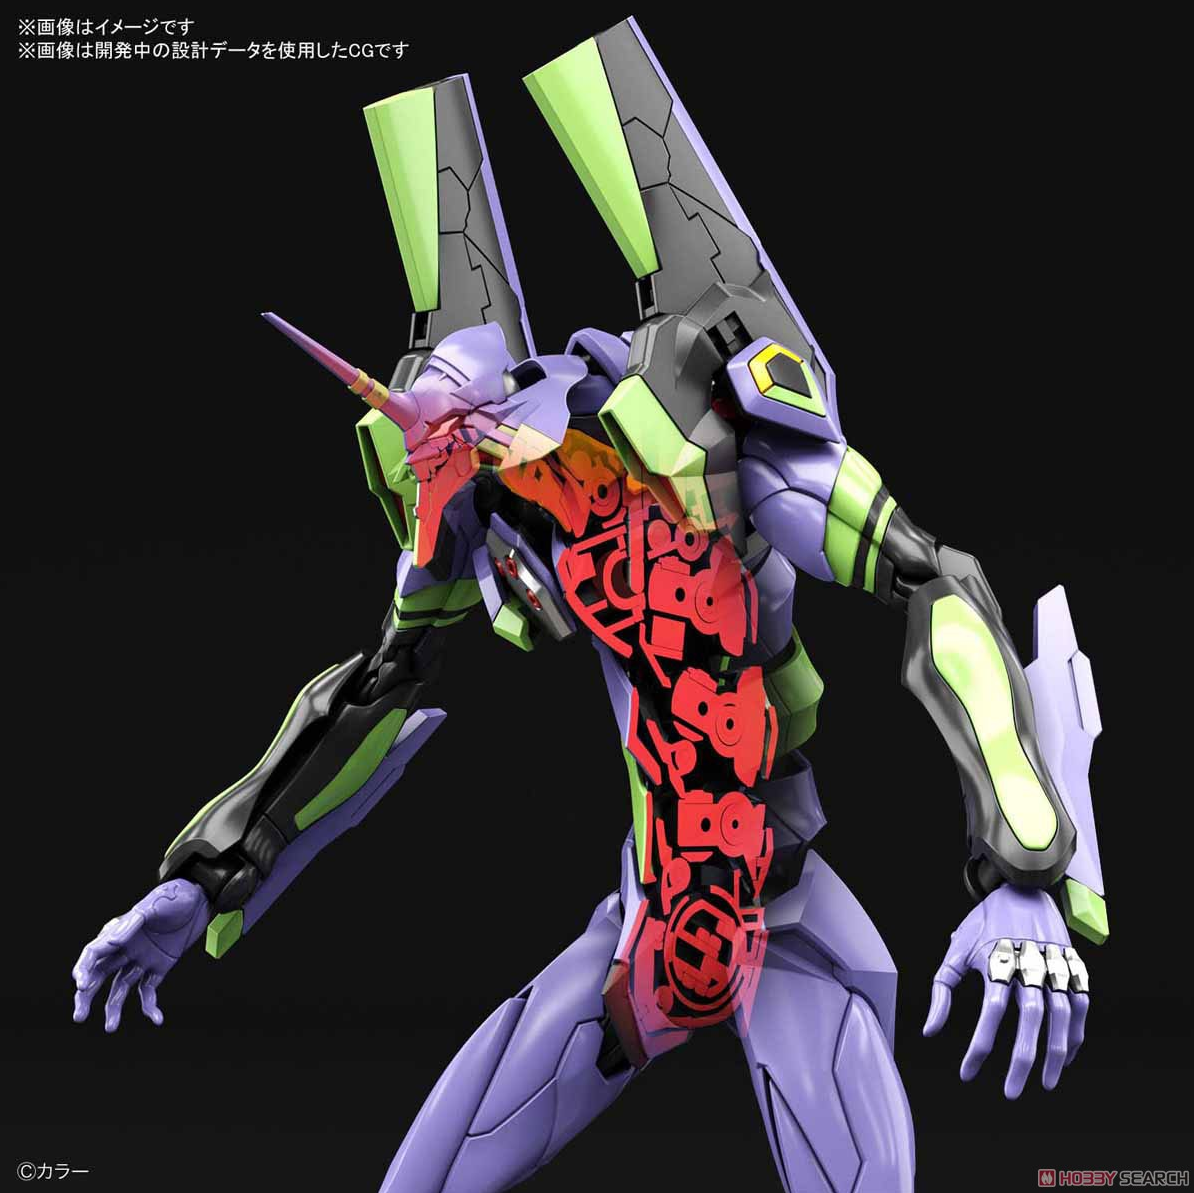 Neon GENISIS Evangelion Figure Bandai LM Eva-02 Production Model Asuka for sale online 